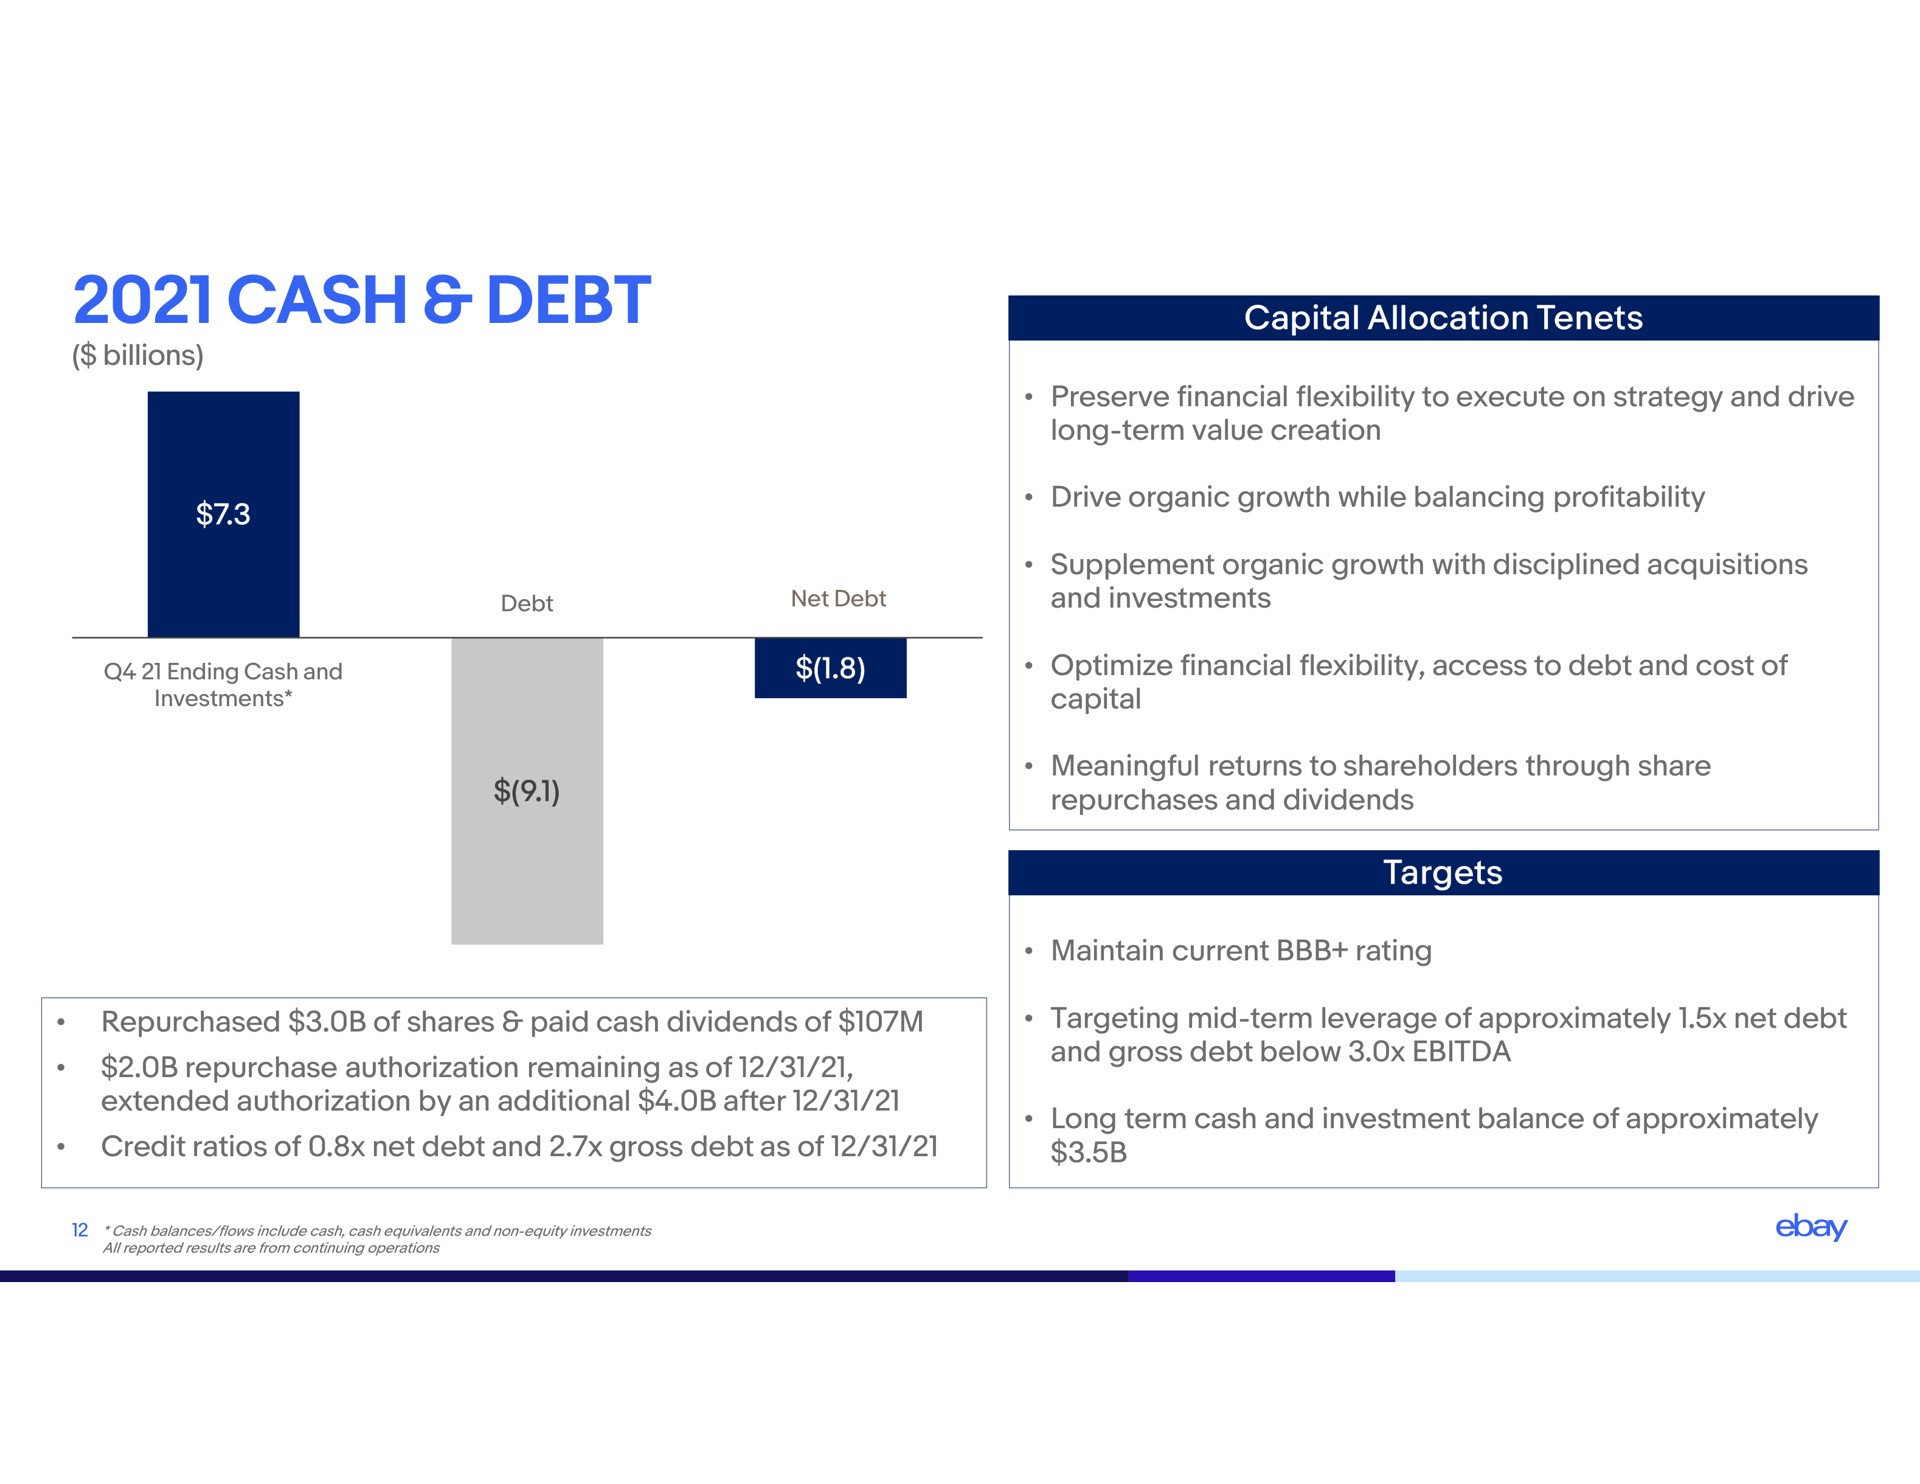 cash debt | eBay